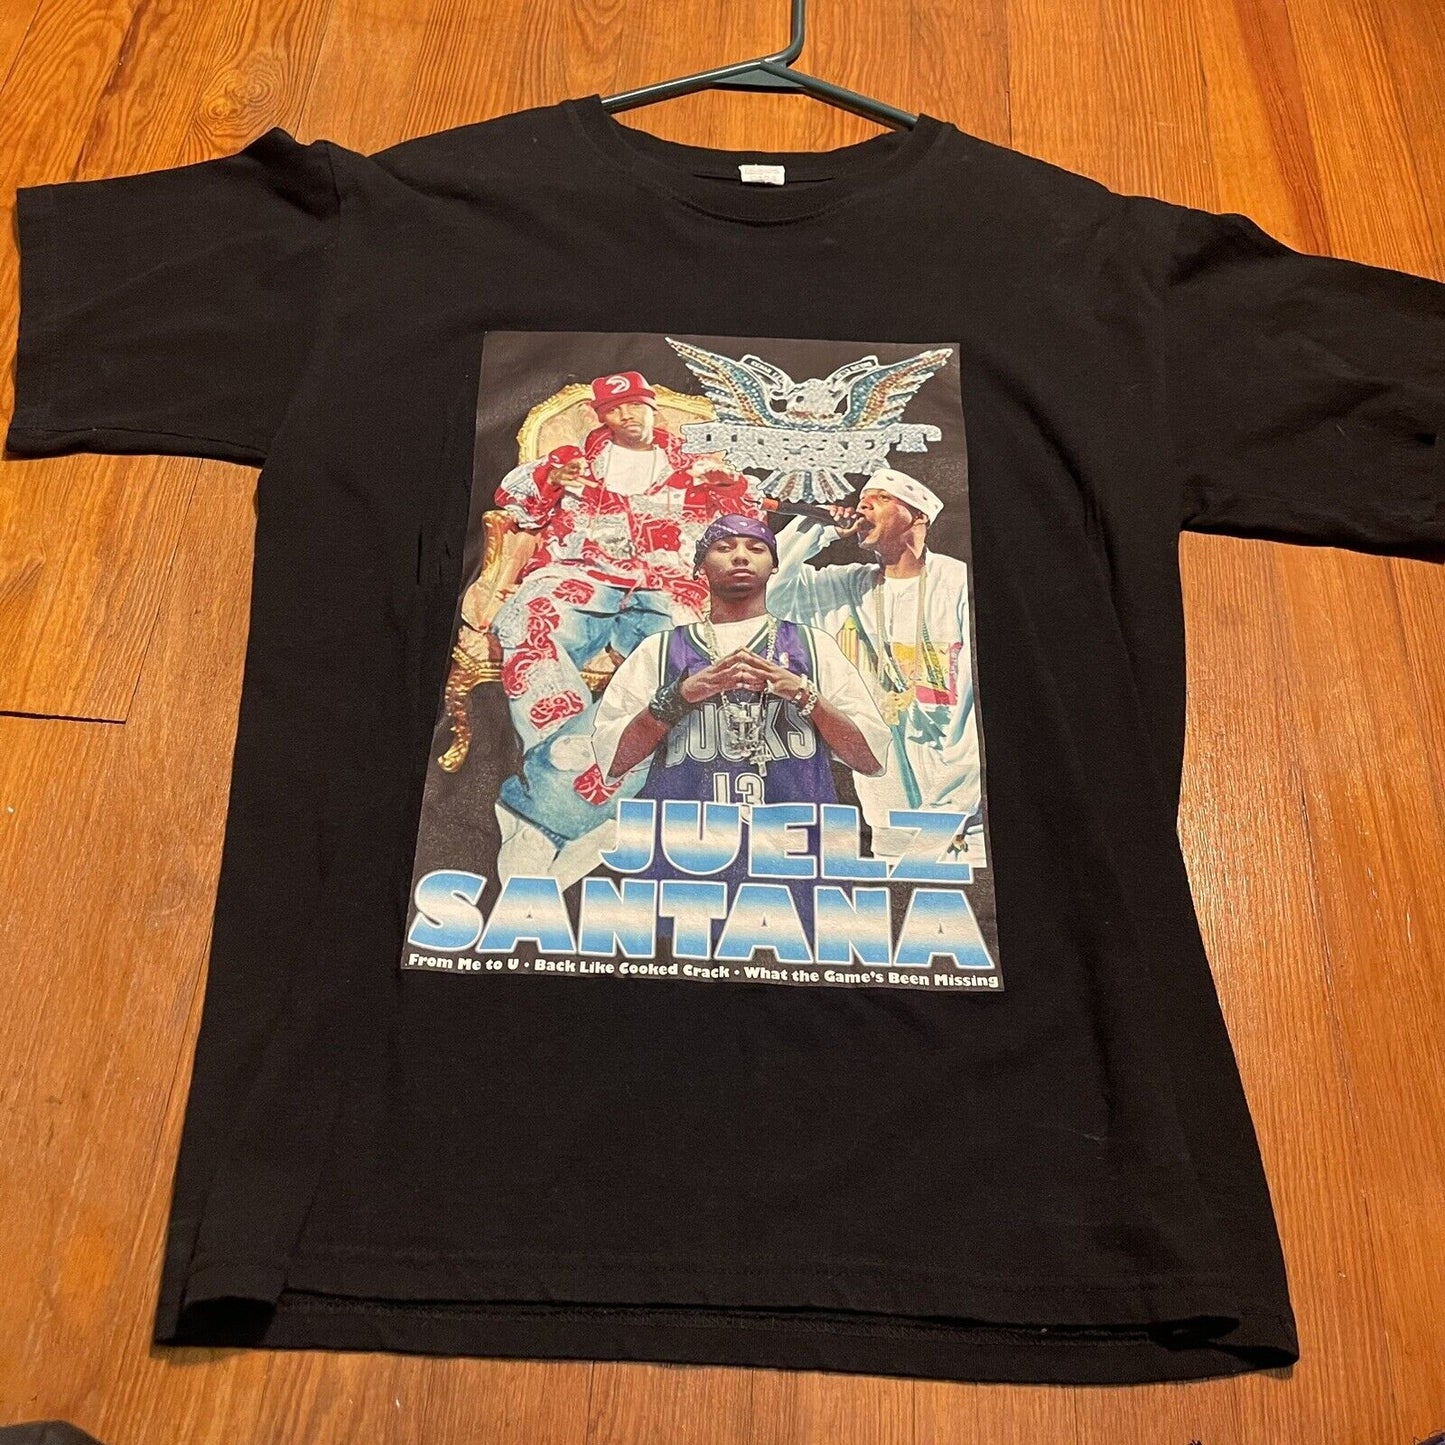 Vintage Dipset Jules Santana’s Rap Hip Hop Shirt Size Medium